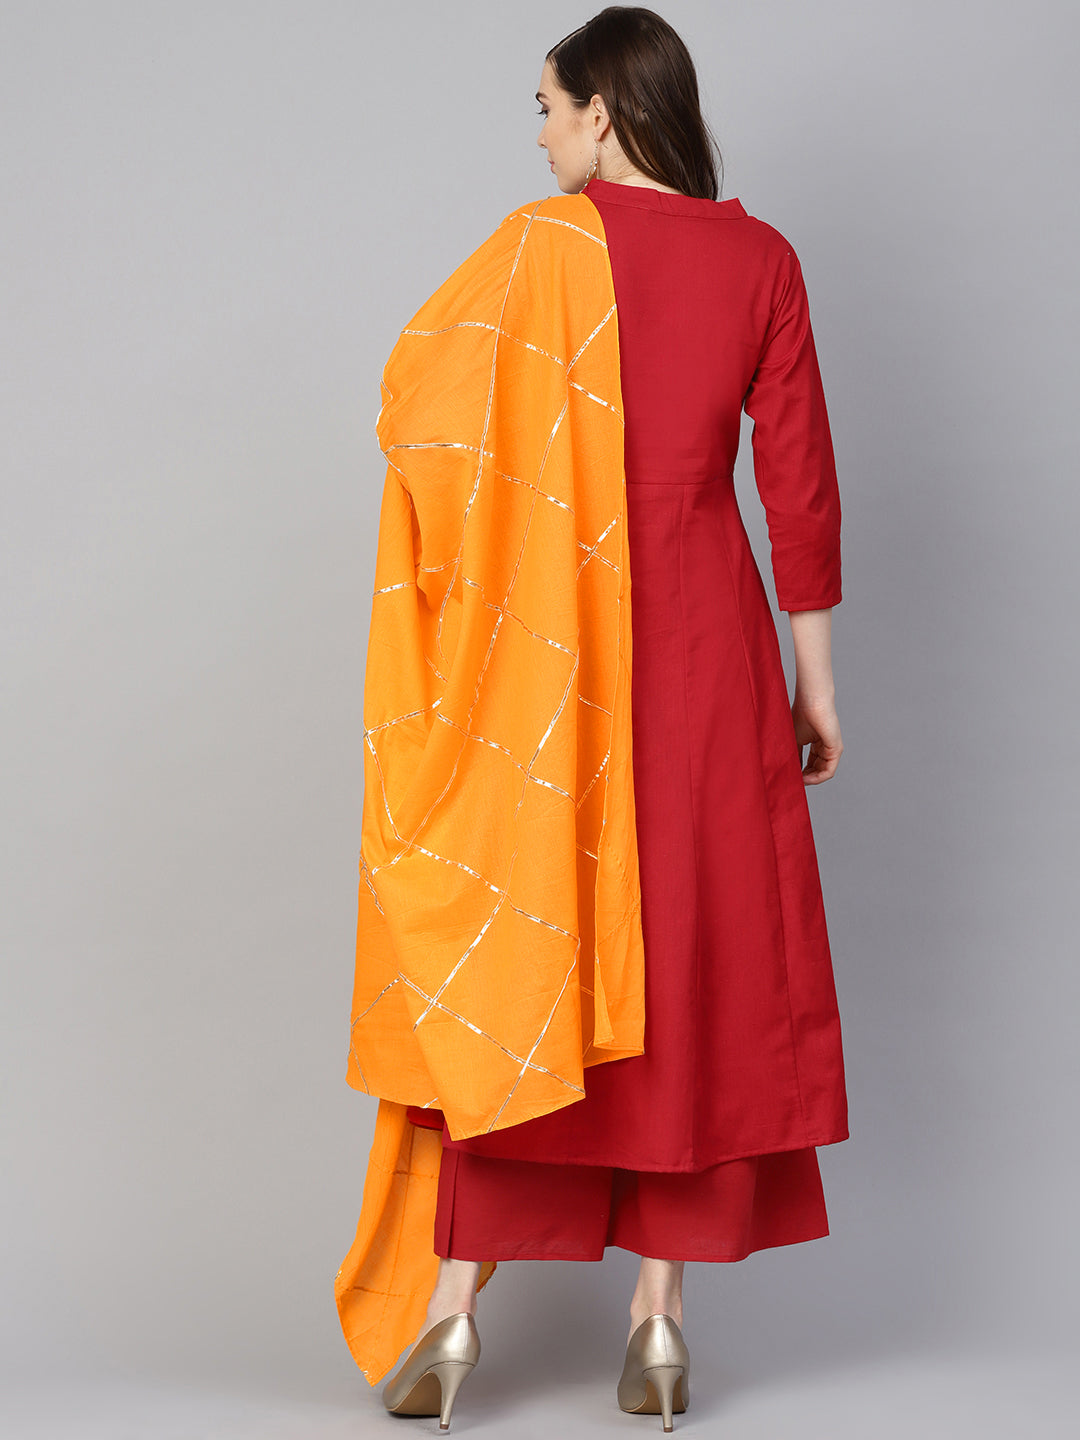 Bhama Couture Women Red & Mustard Yellow Yoke Design Kurta with Palazzos & Dupatta